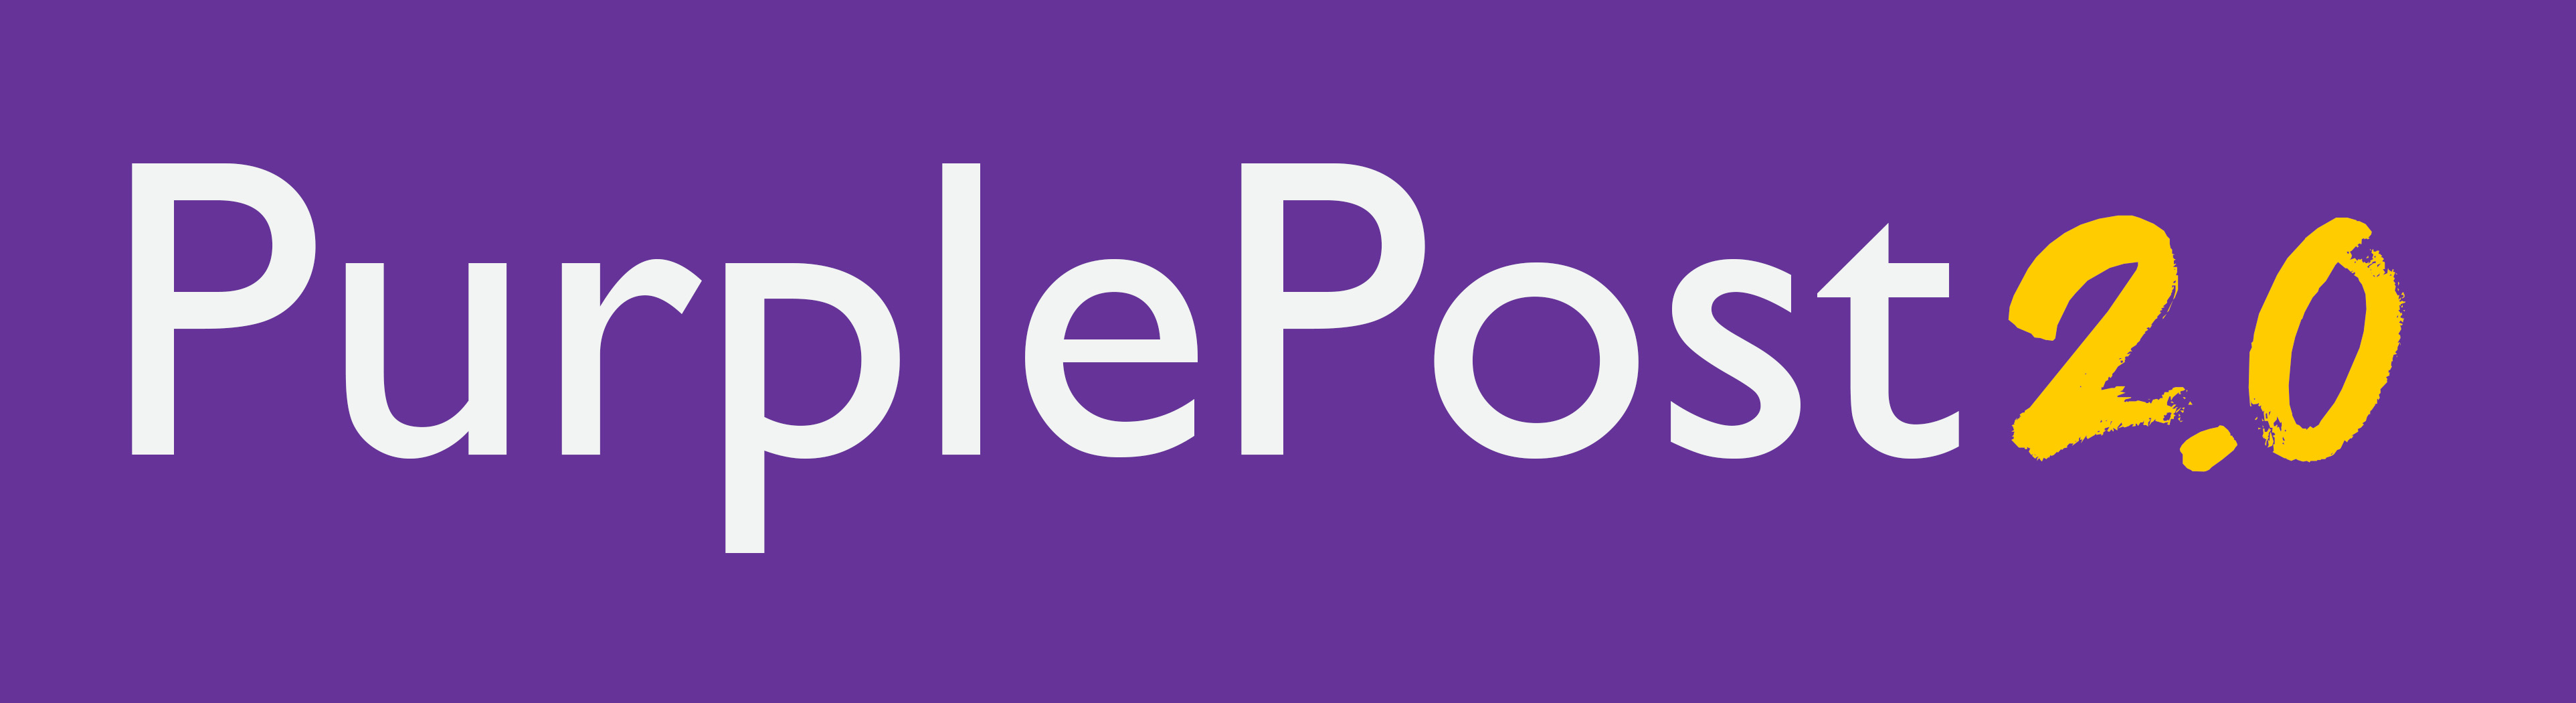 PurplePost 2.0